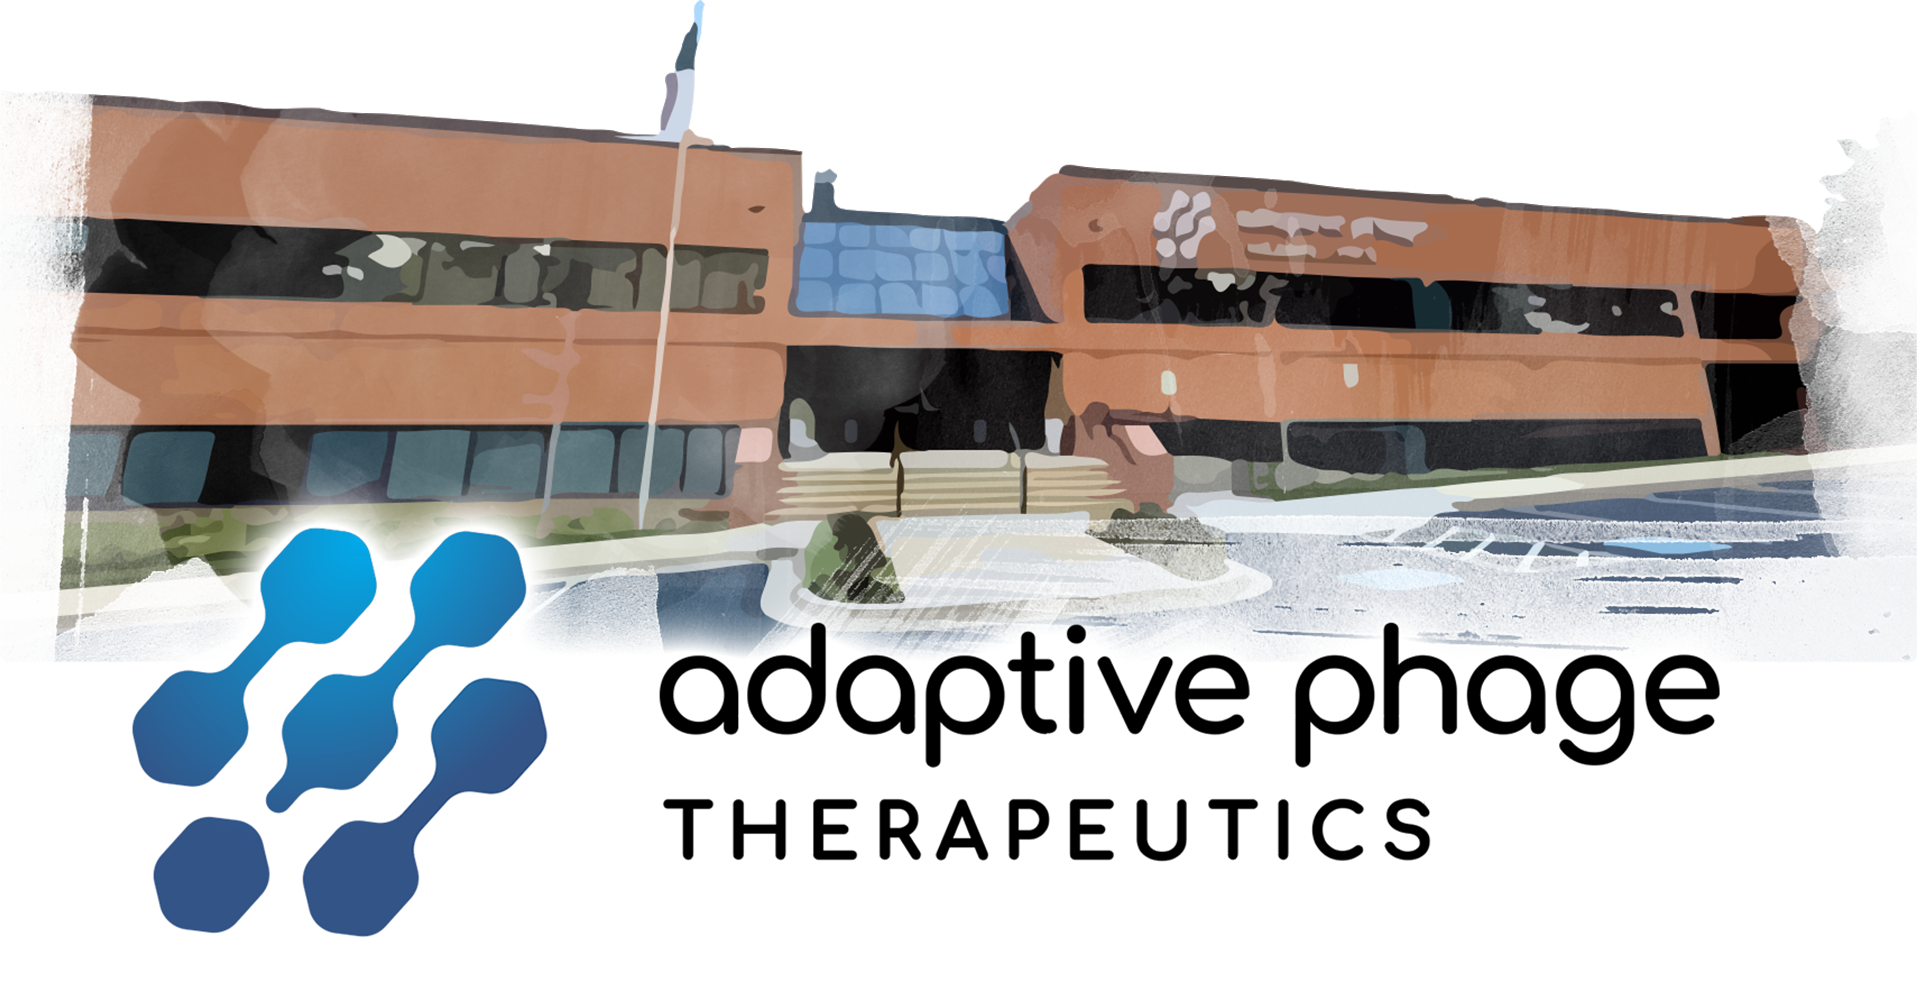 Adaptive Phage Therapeutics